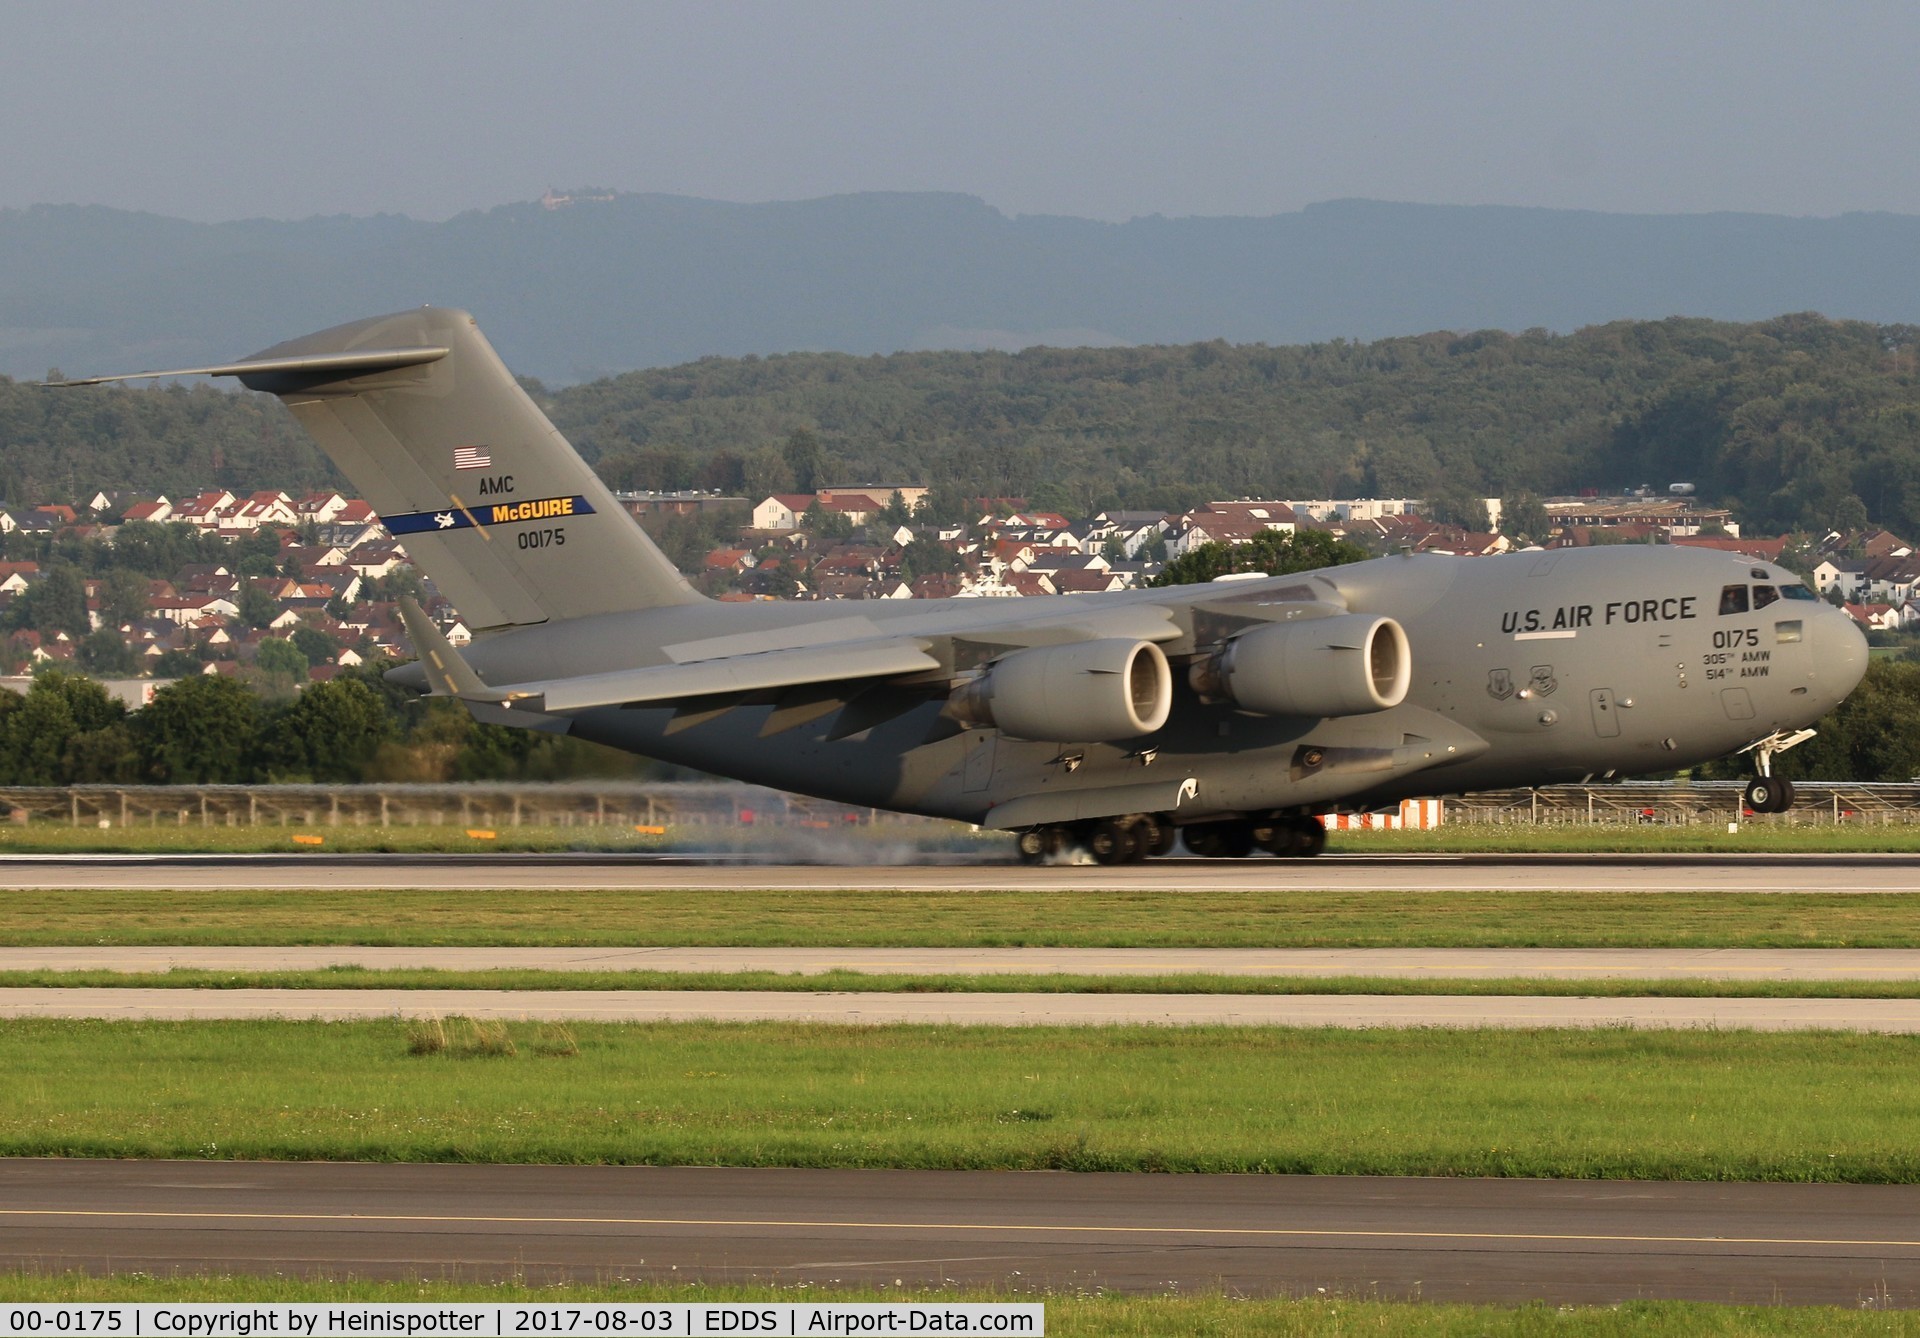 00-0175, 2000 Boeing C-17A Globemaster III C/N P-75, 00-0175 at Stuttgart Airport.